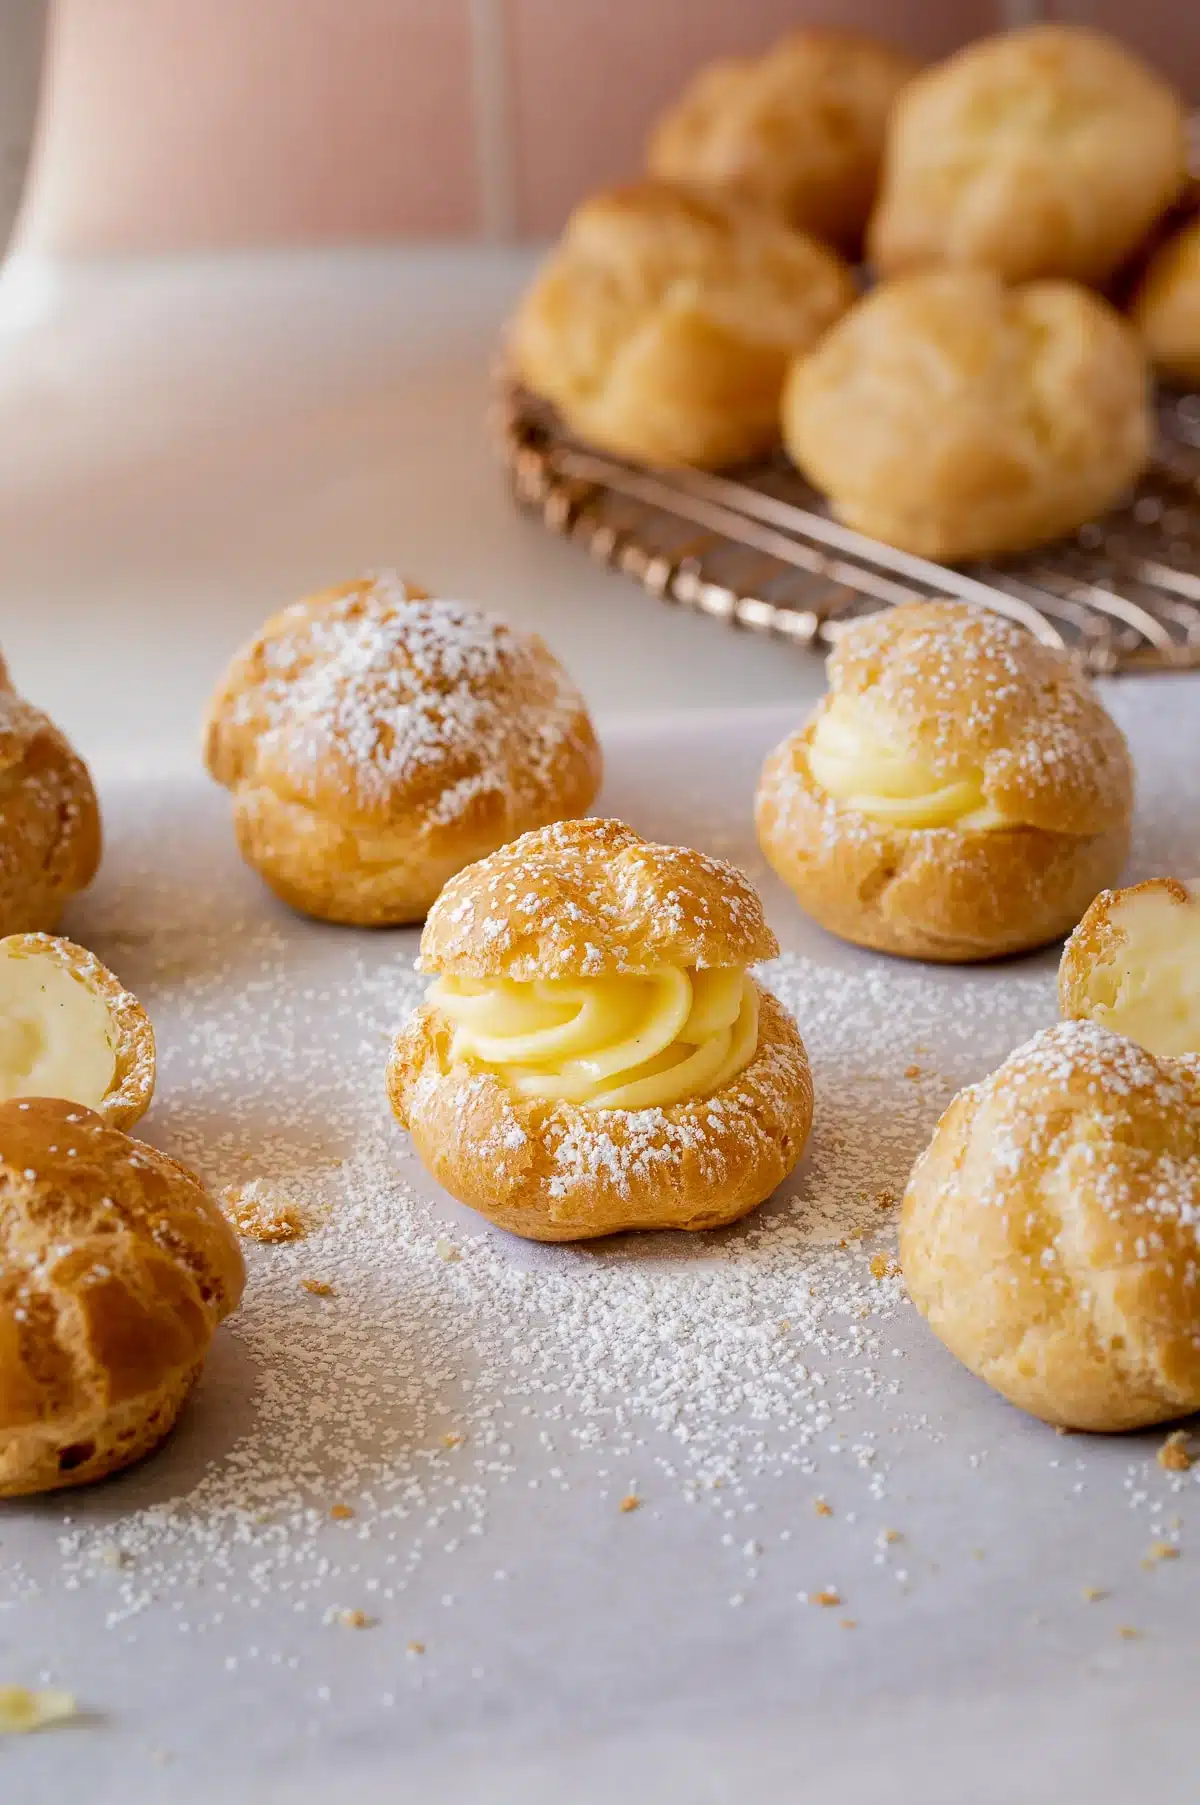 Cream filled choux pastries.